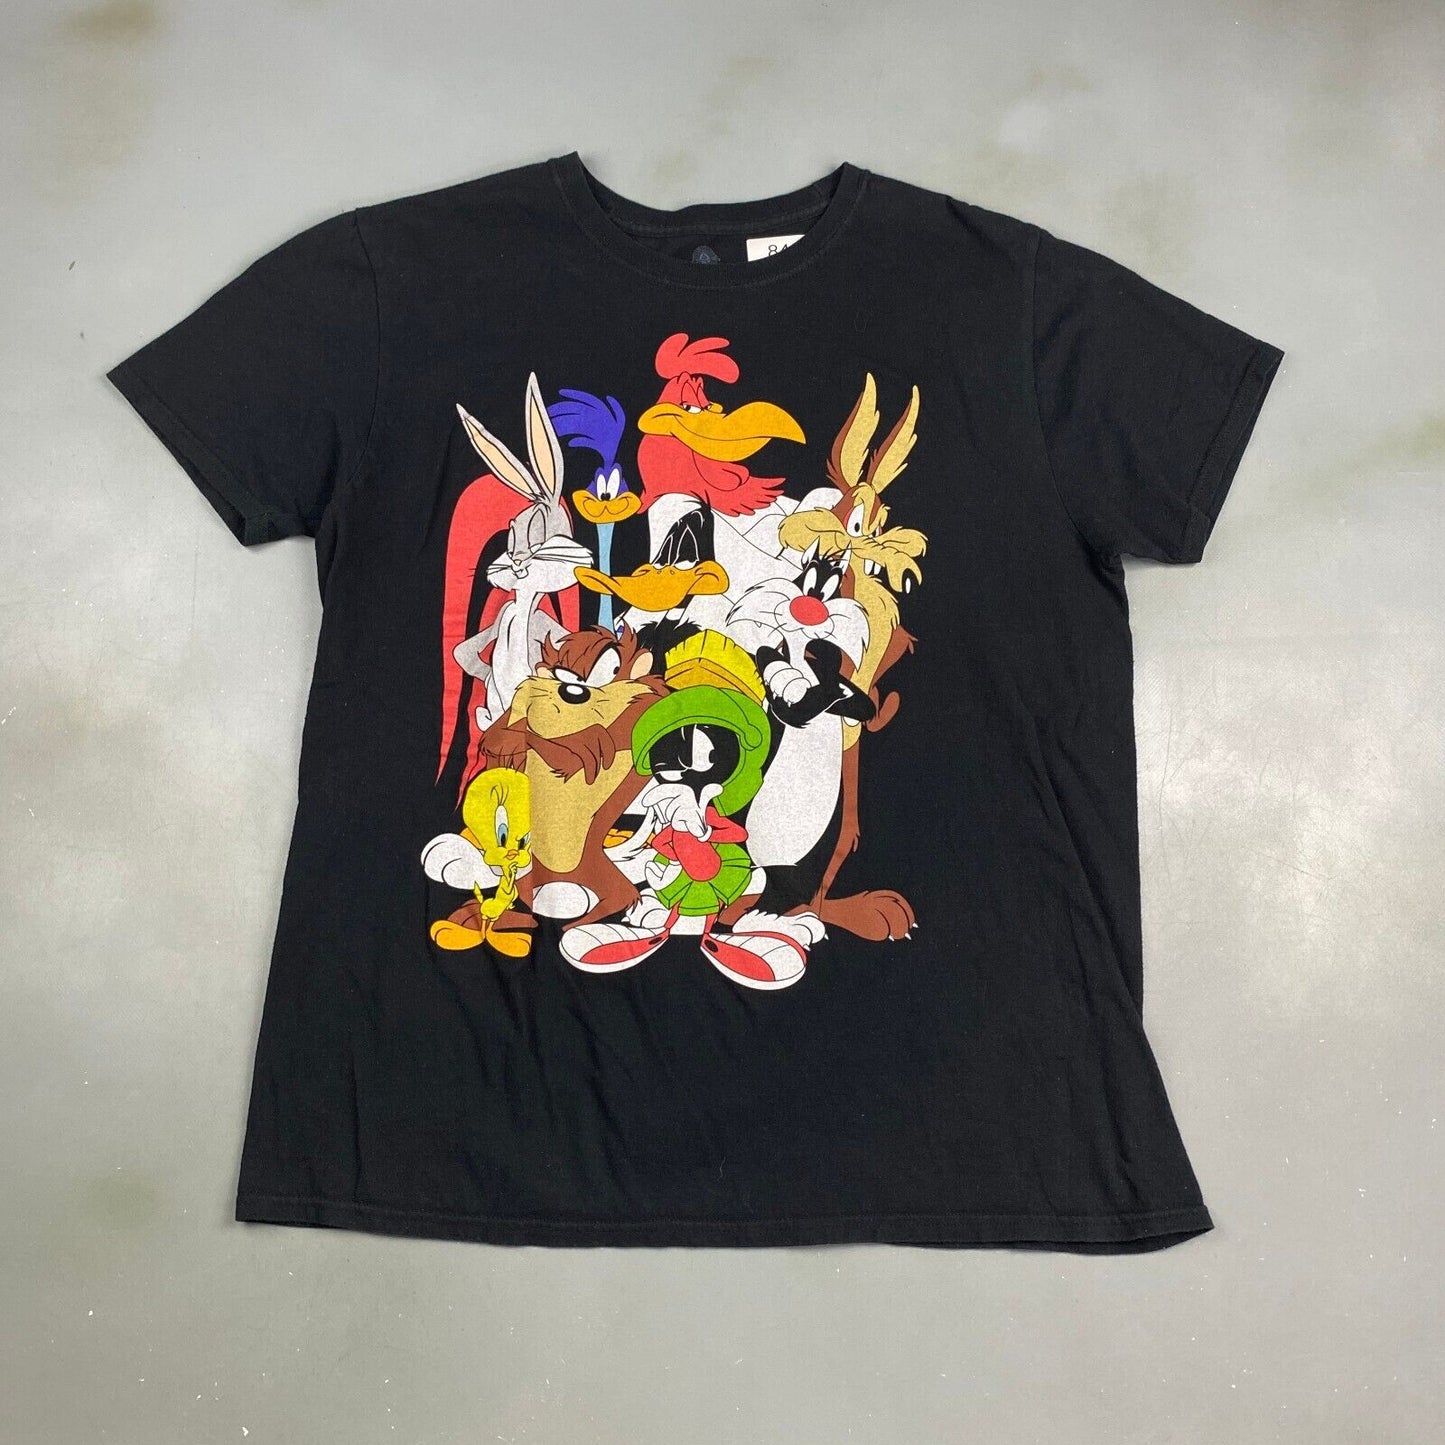 Looney Tunes Characters Warner Bro Black T-Shirt sz Large Men Adult